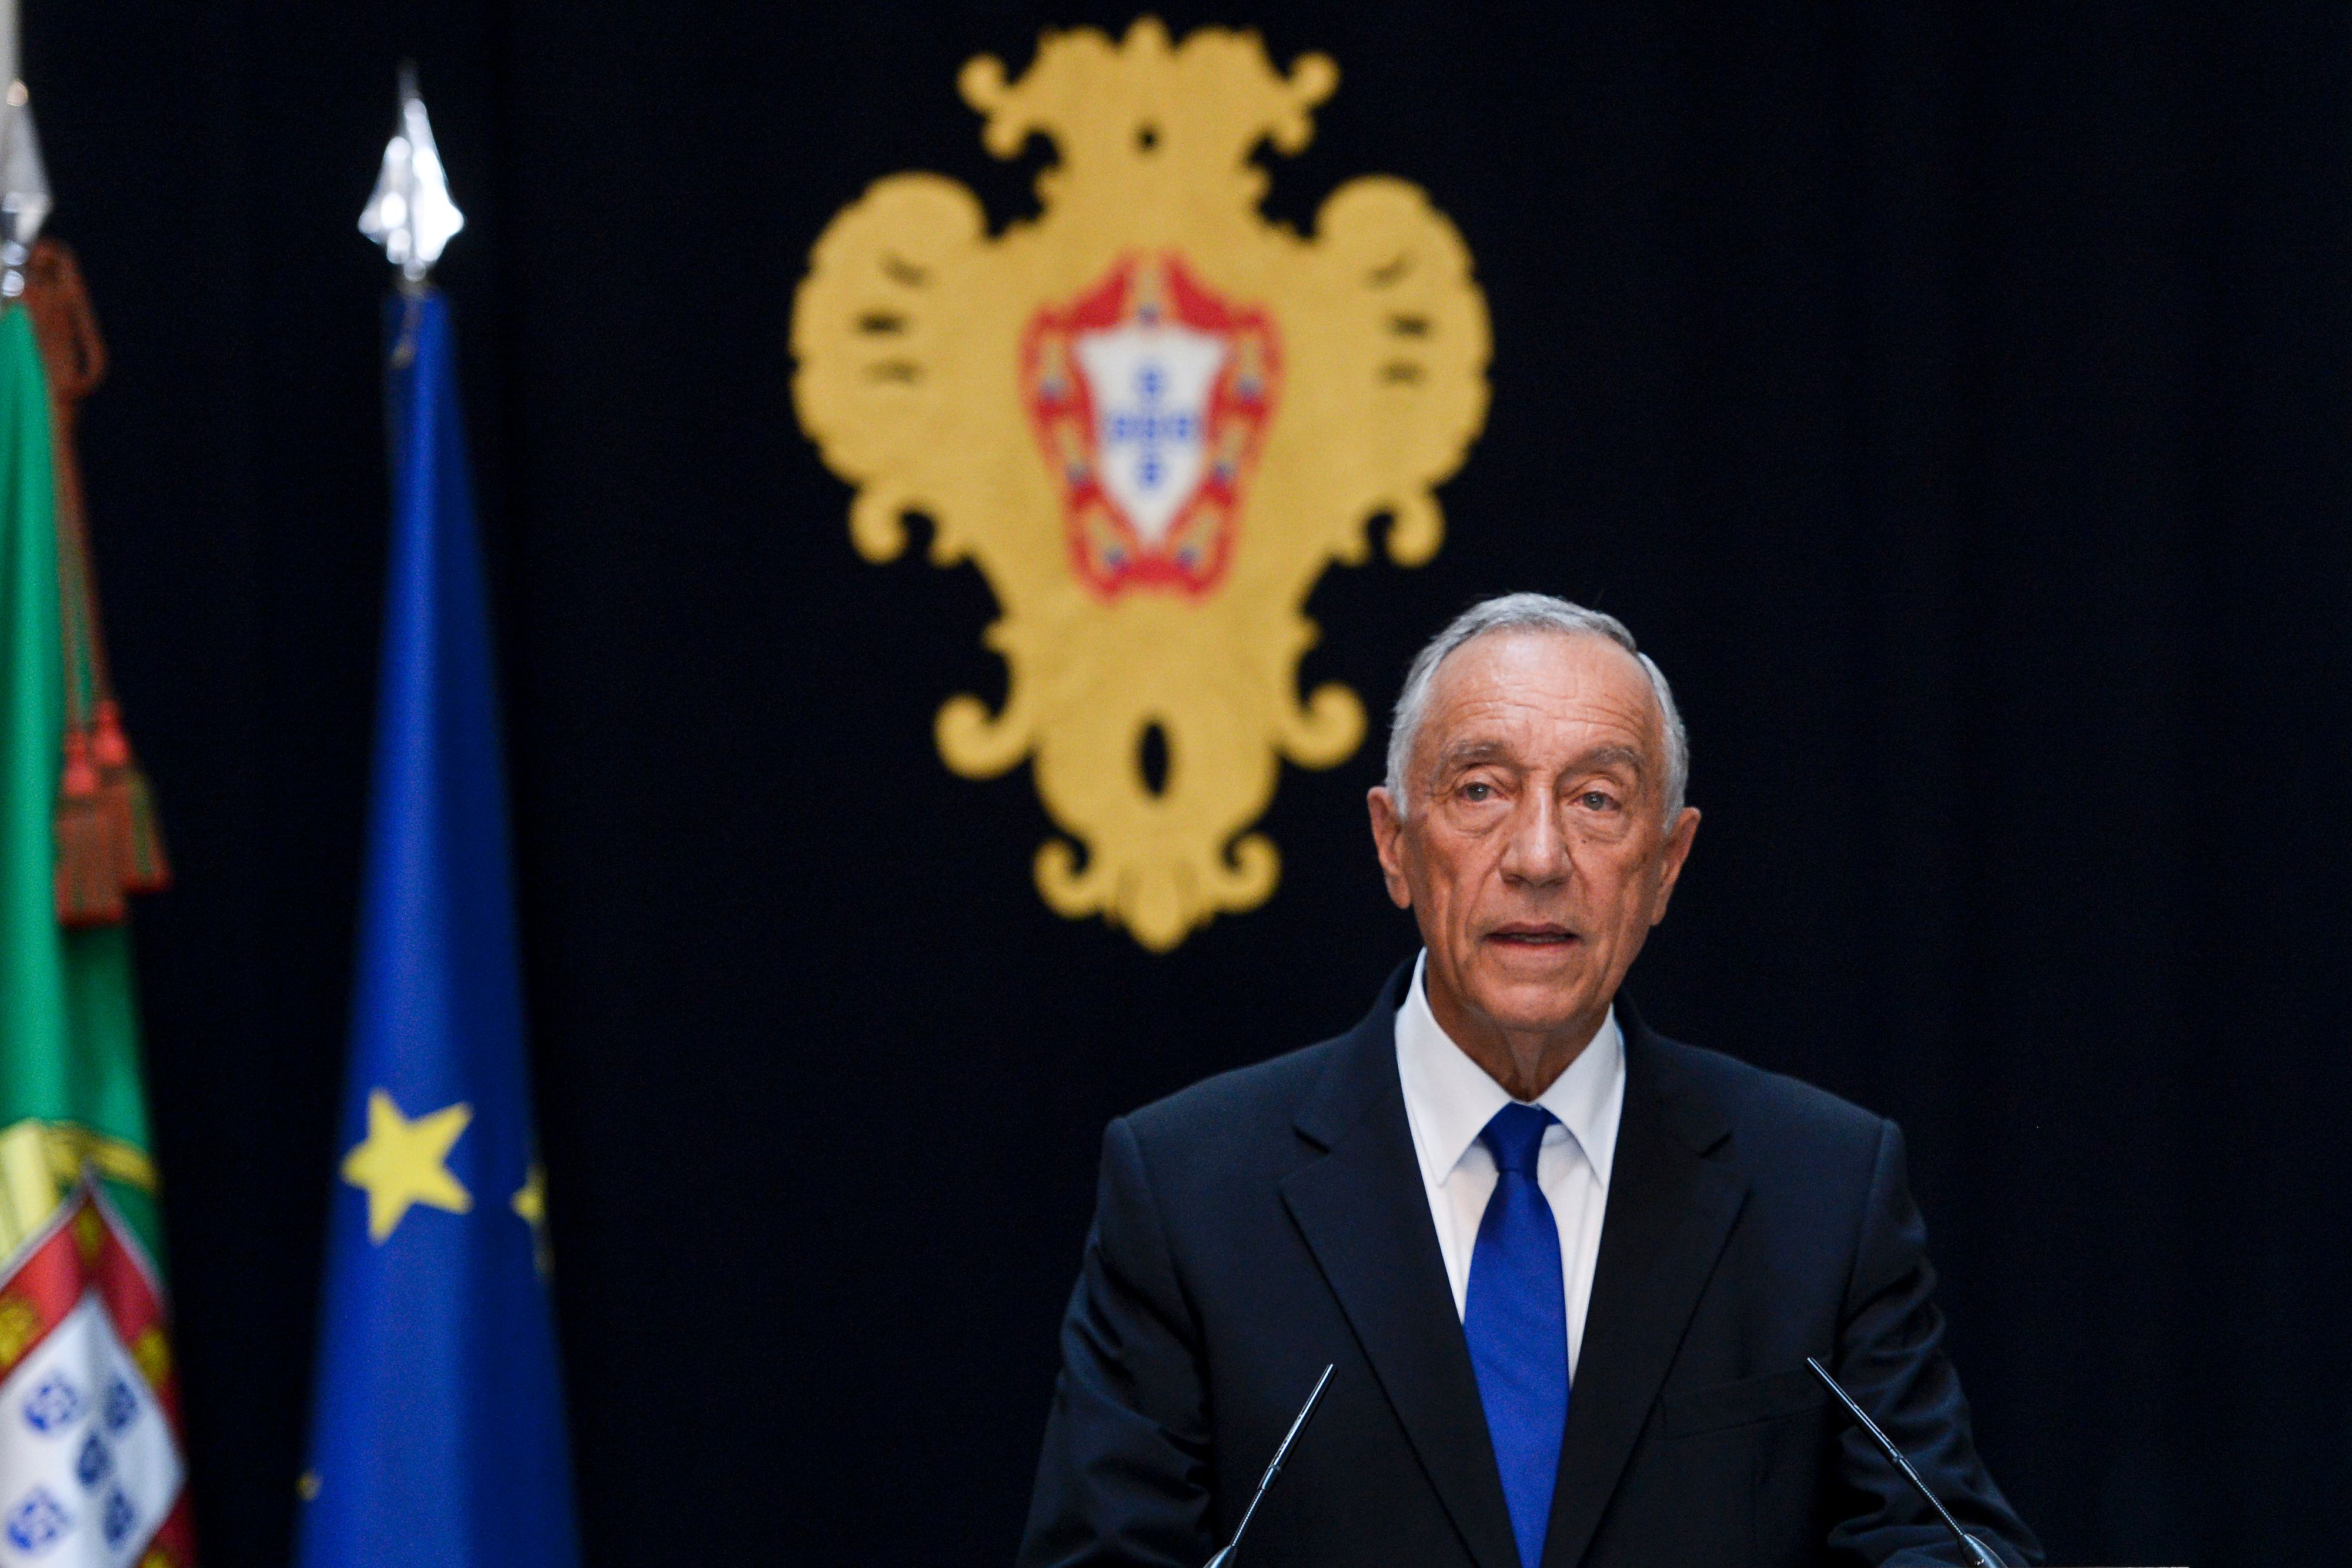 Portuguese President Marcelo Rebelo de Sousa makes a statement at Belém Palace in Lisbon, Portugal, on July 27, 2016.